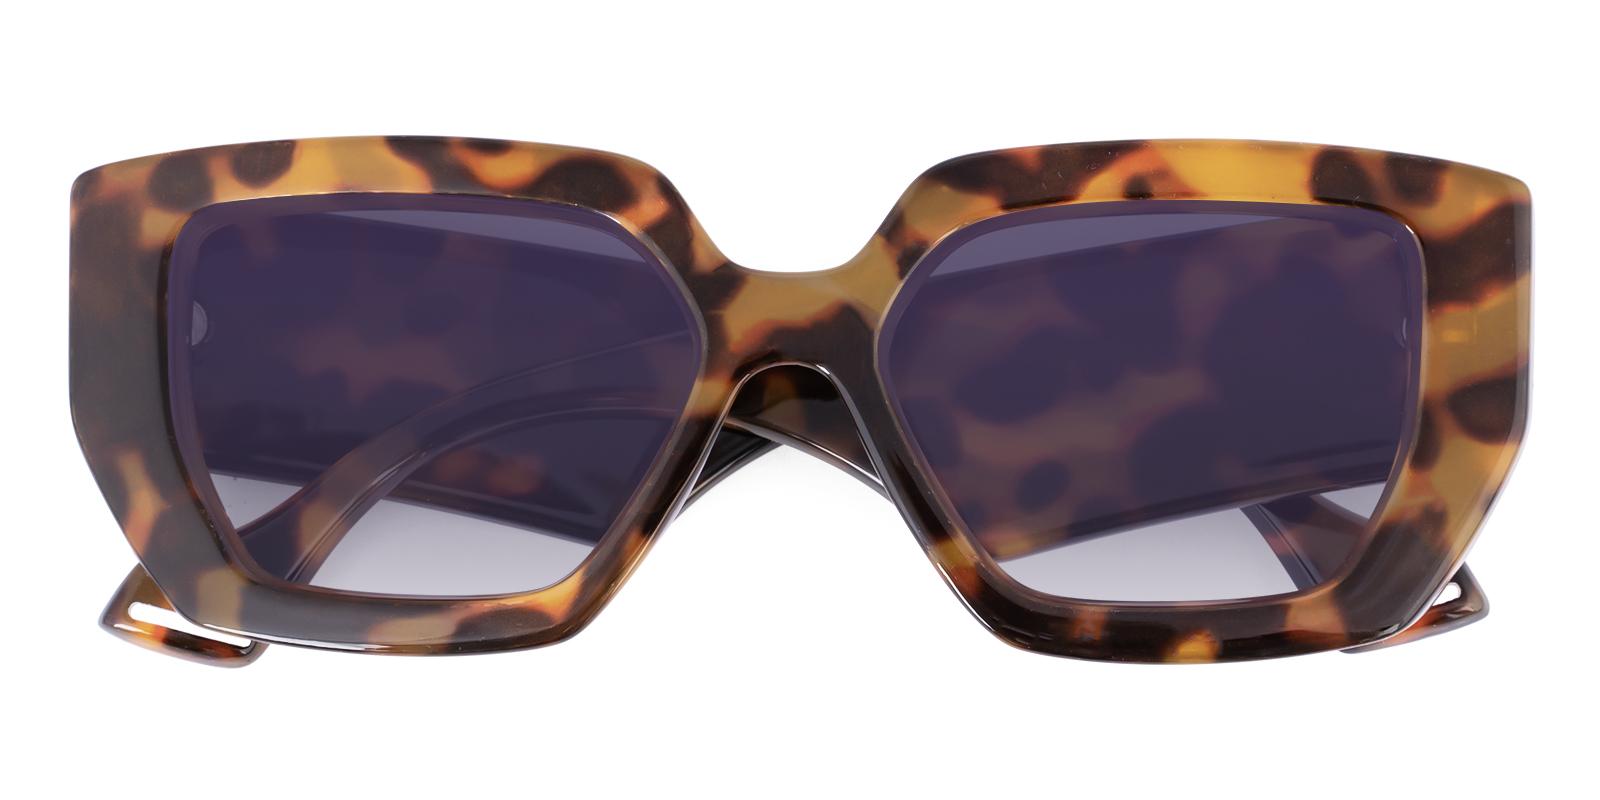 Juriaire Tortoise Acetate Sunglasses , UniversalBridgeFit Frames from ABBE Glasses